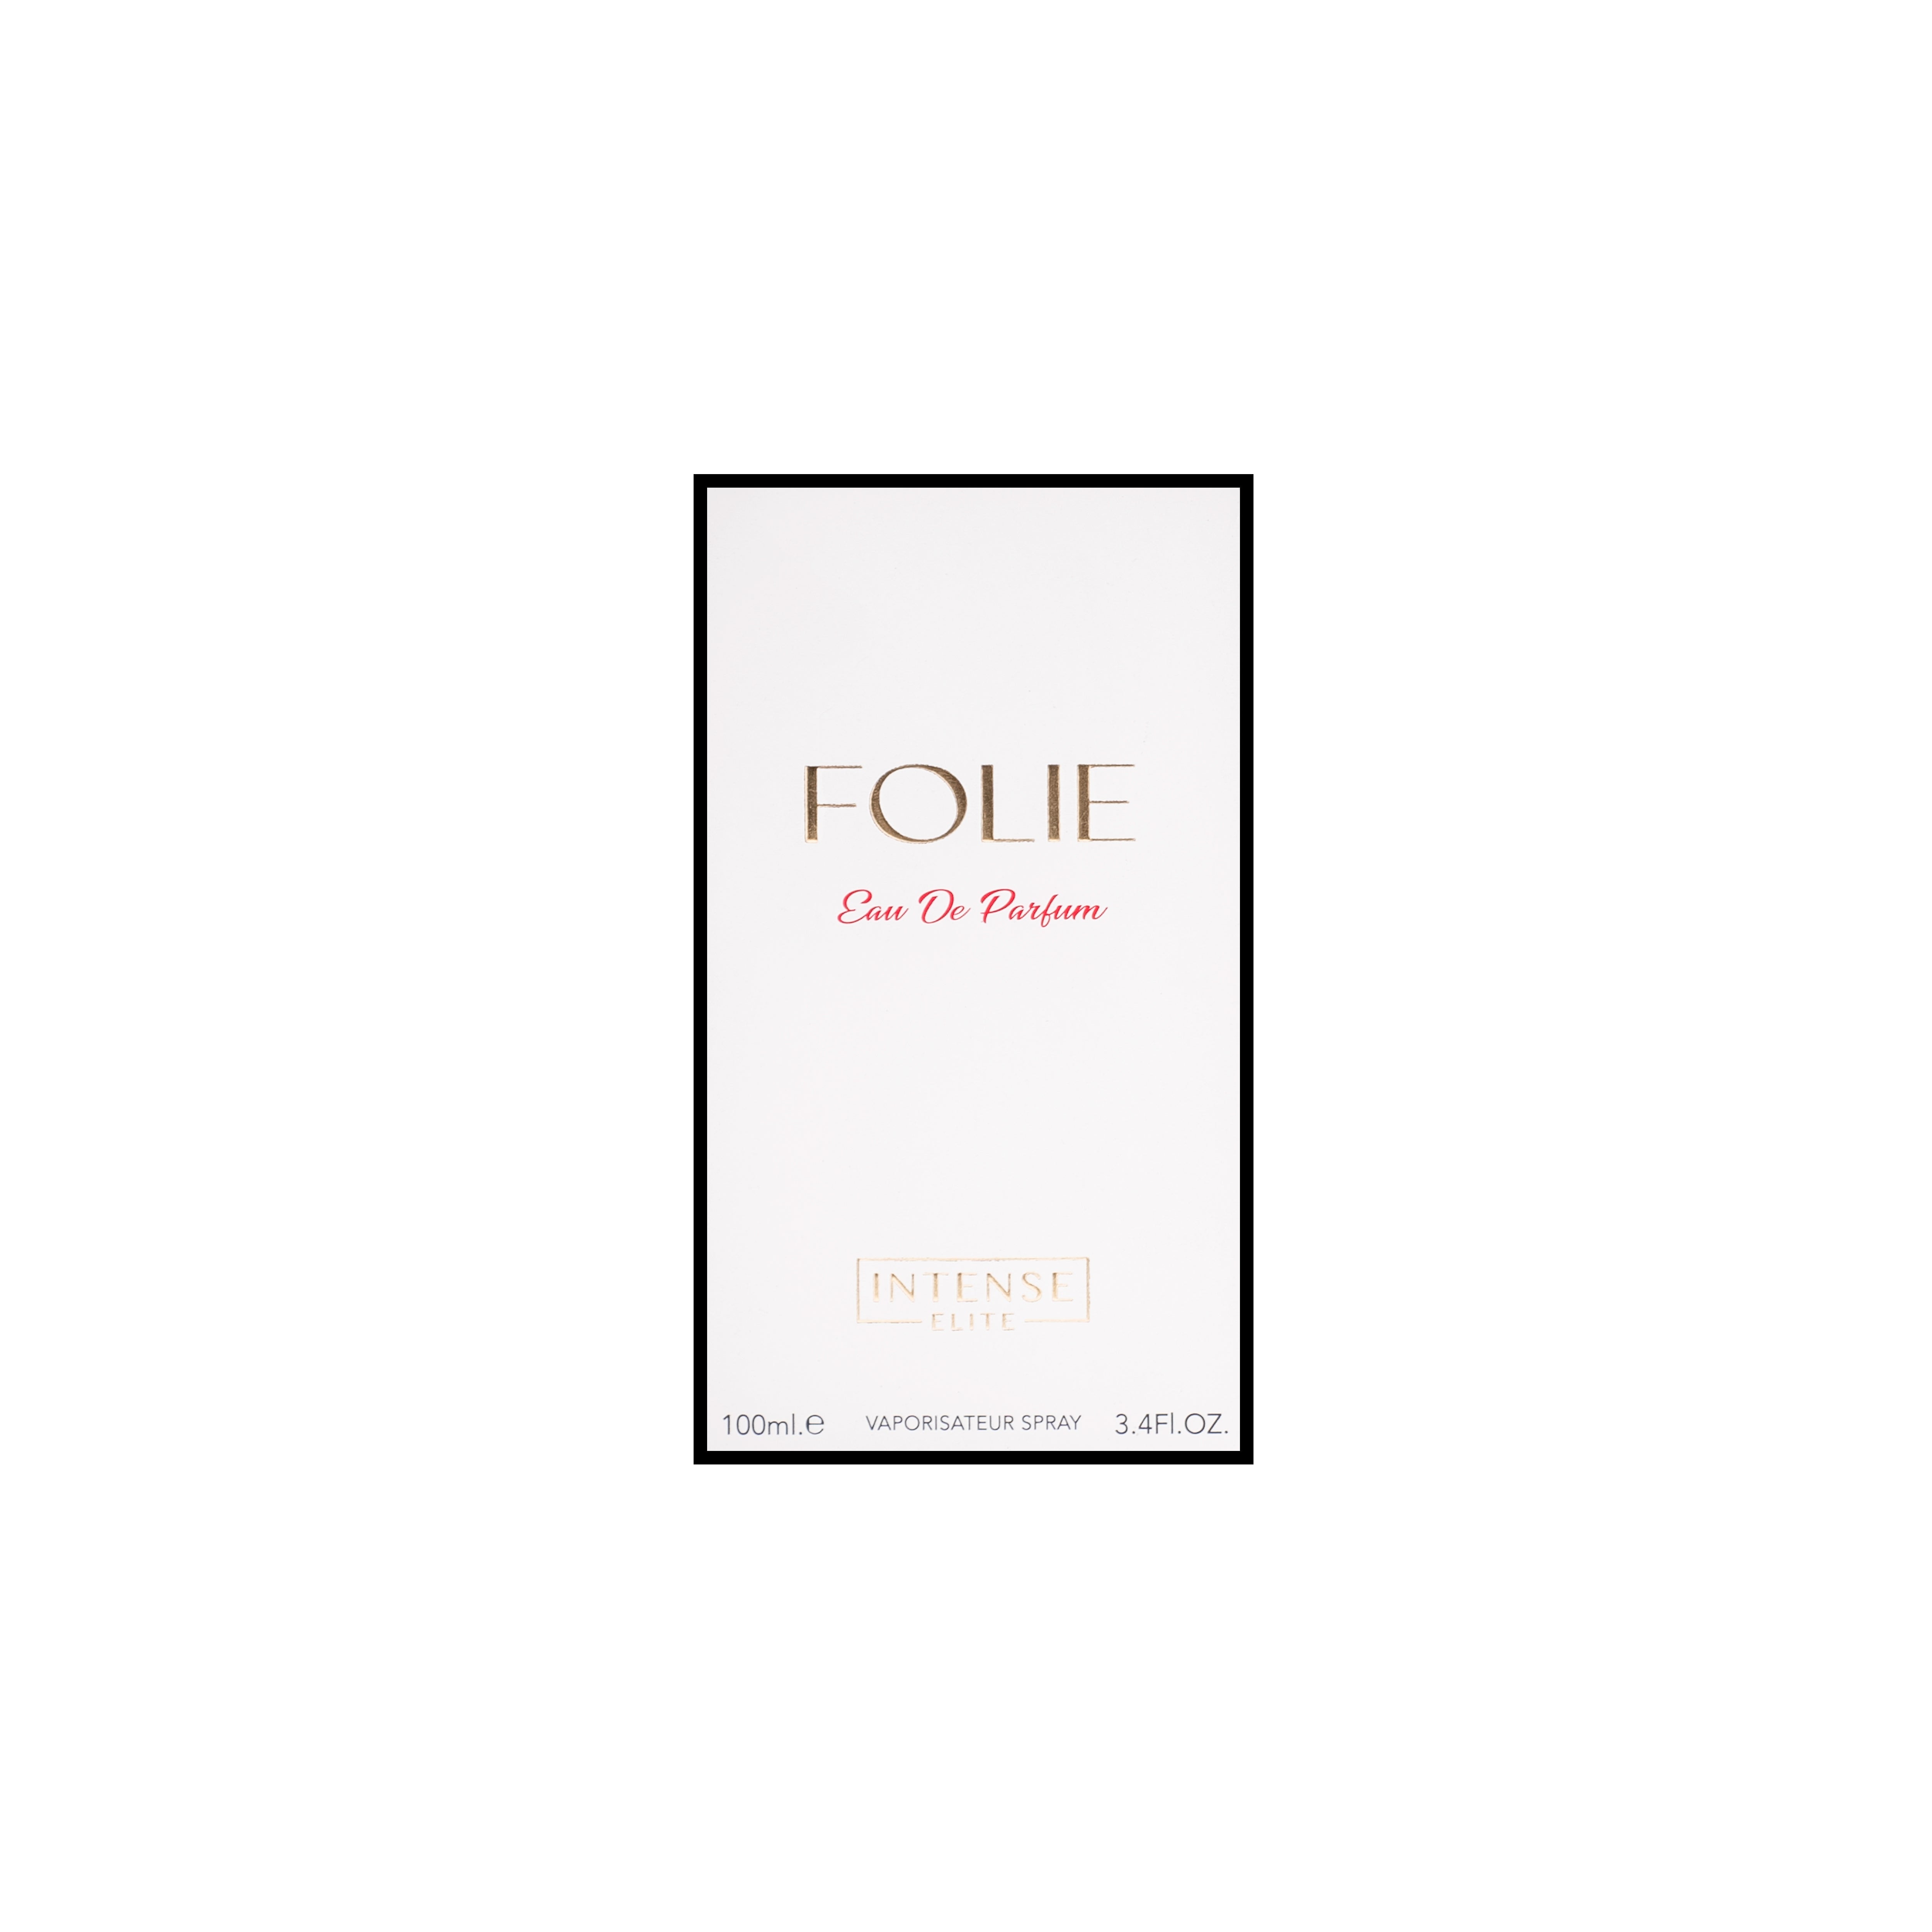 Folie - Eau De Parfum 100ml (3.4 oz)